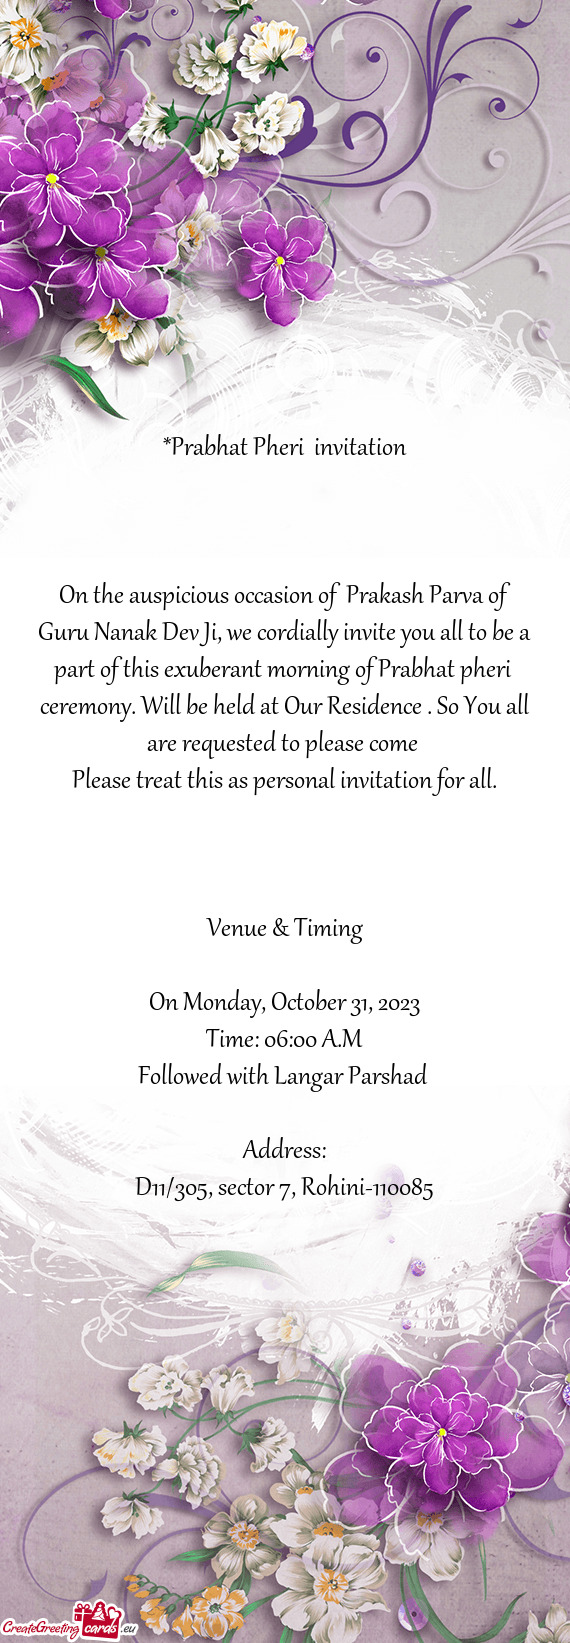 On the auspicious occasion of Prakash Parva of Guru Nanak Dev Ji, we cordially invite you all to be